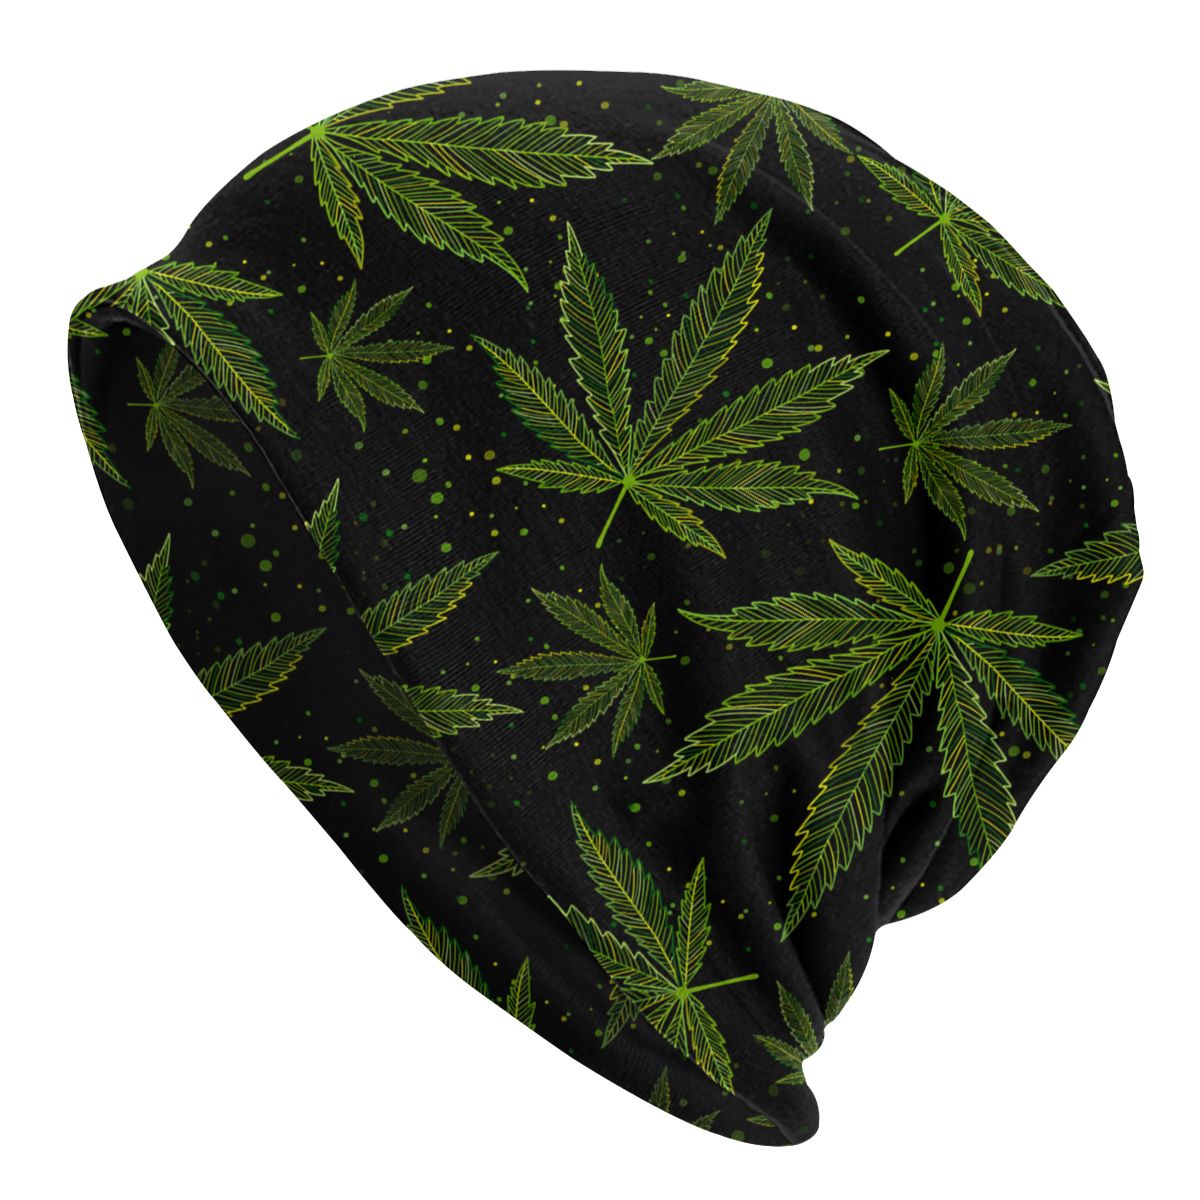 Marijuana/Weed/Leaf Cuff Beanie-Hat Skully - Knit Winter Hat Women